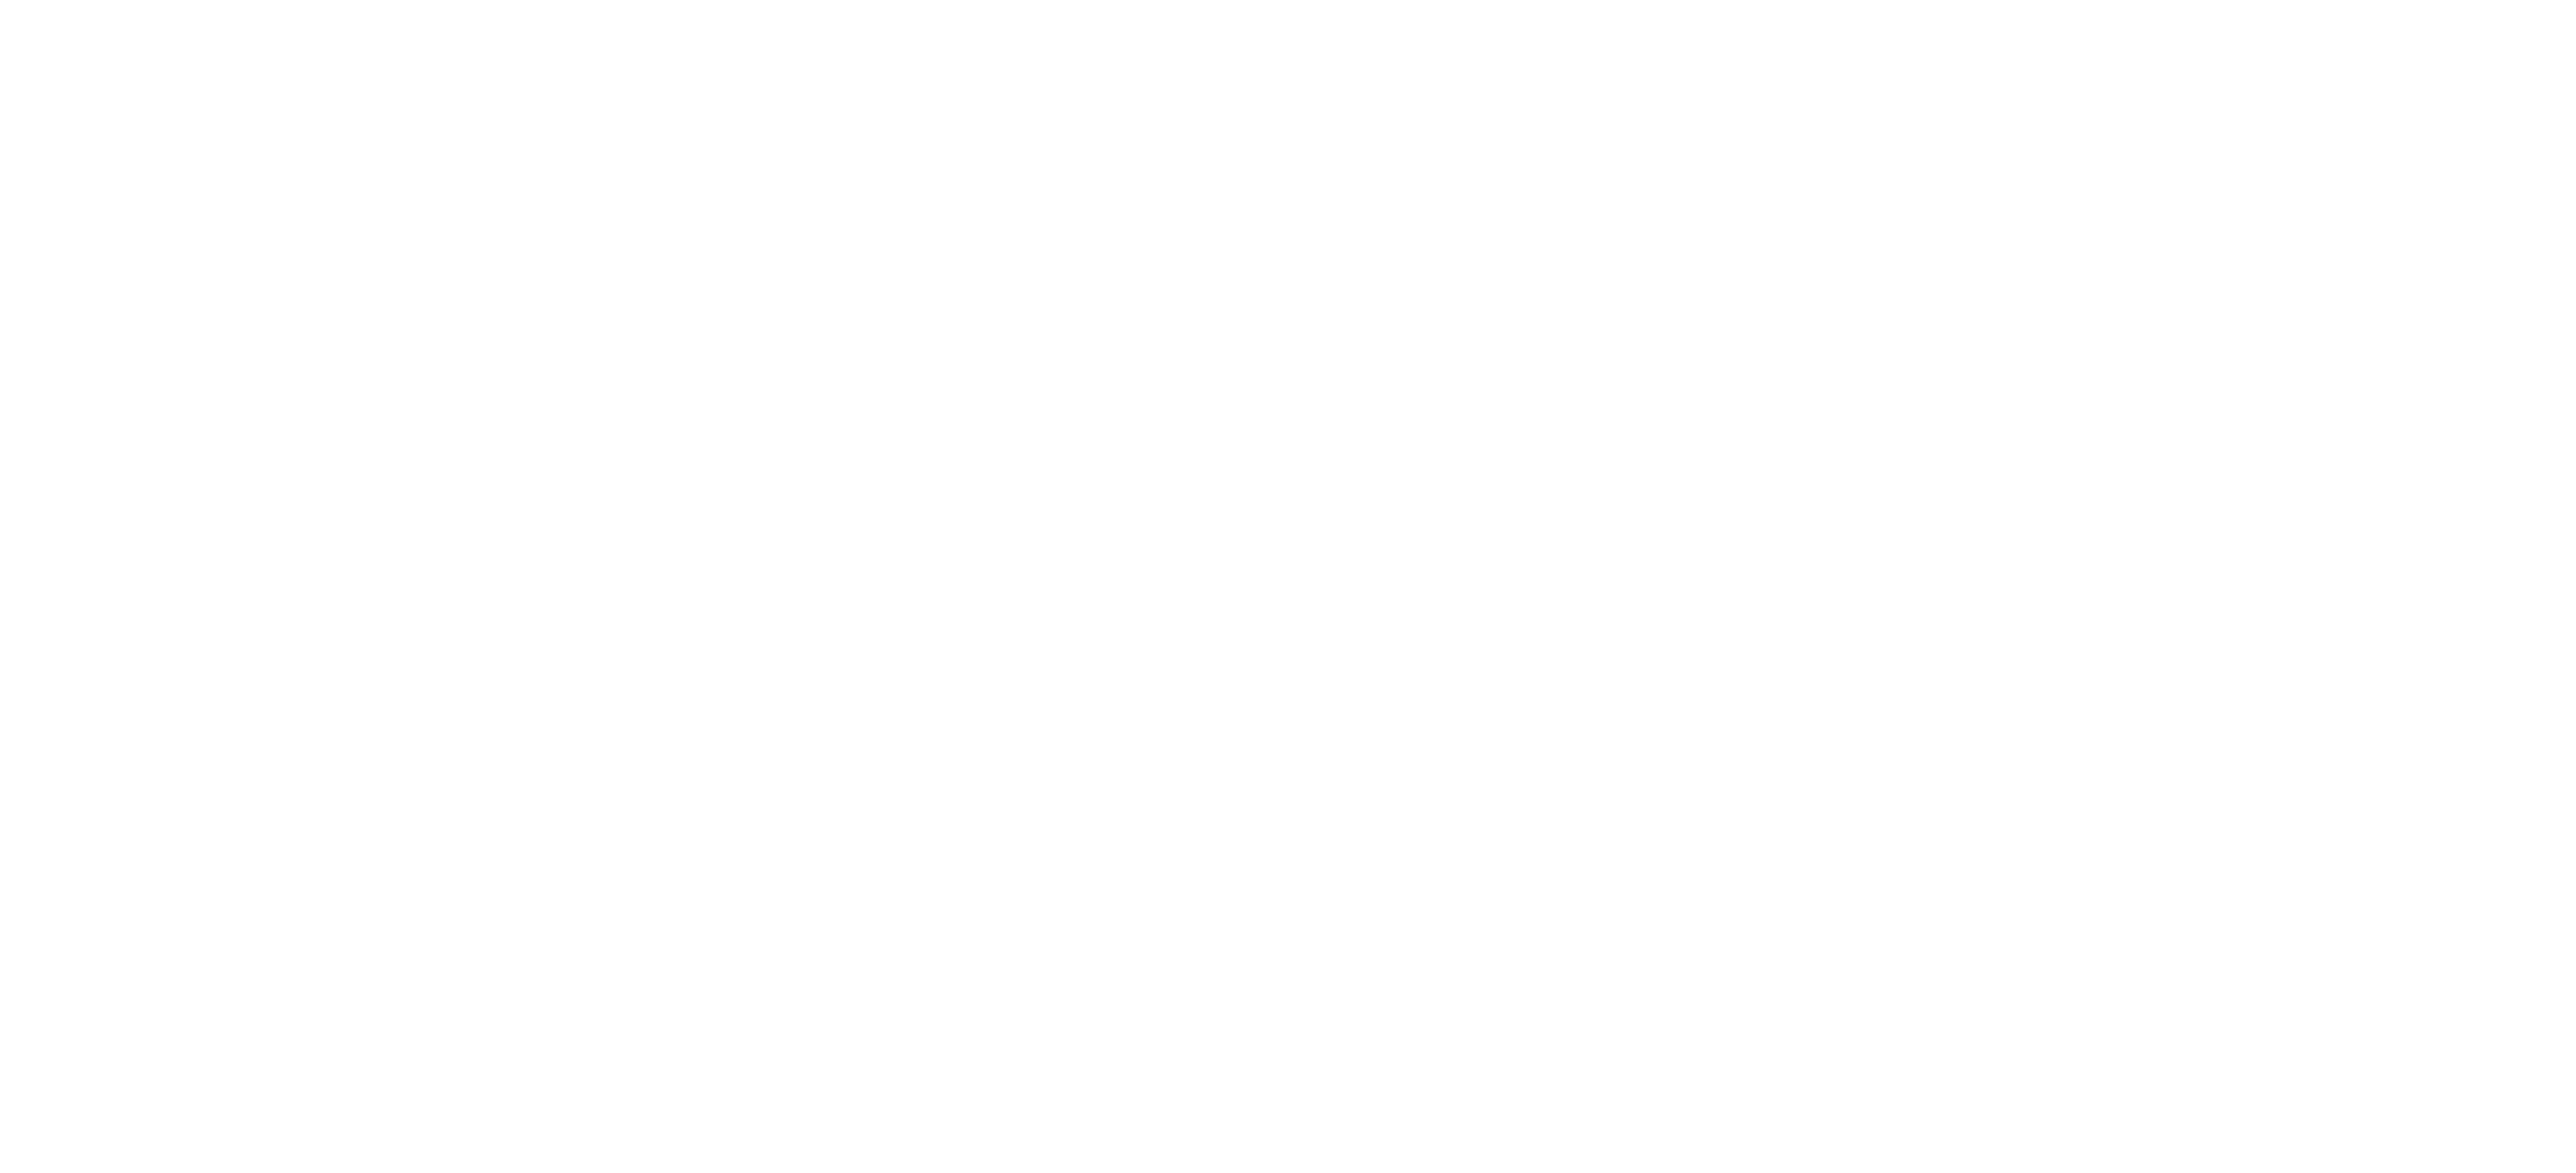 Black Business Logo - Business Insider Logos - Business Insider